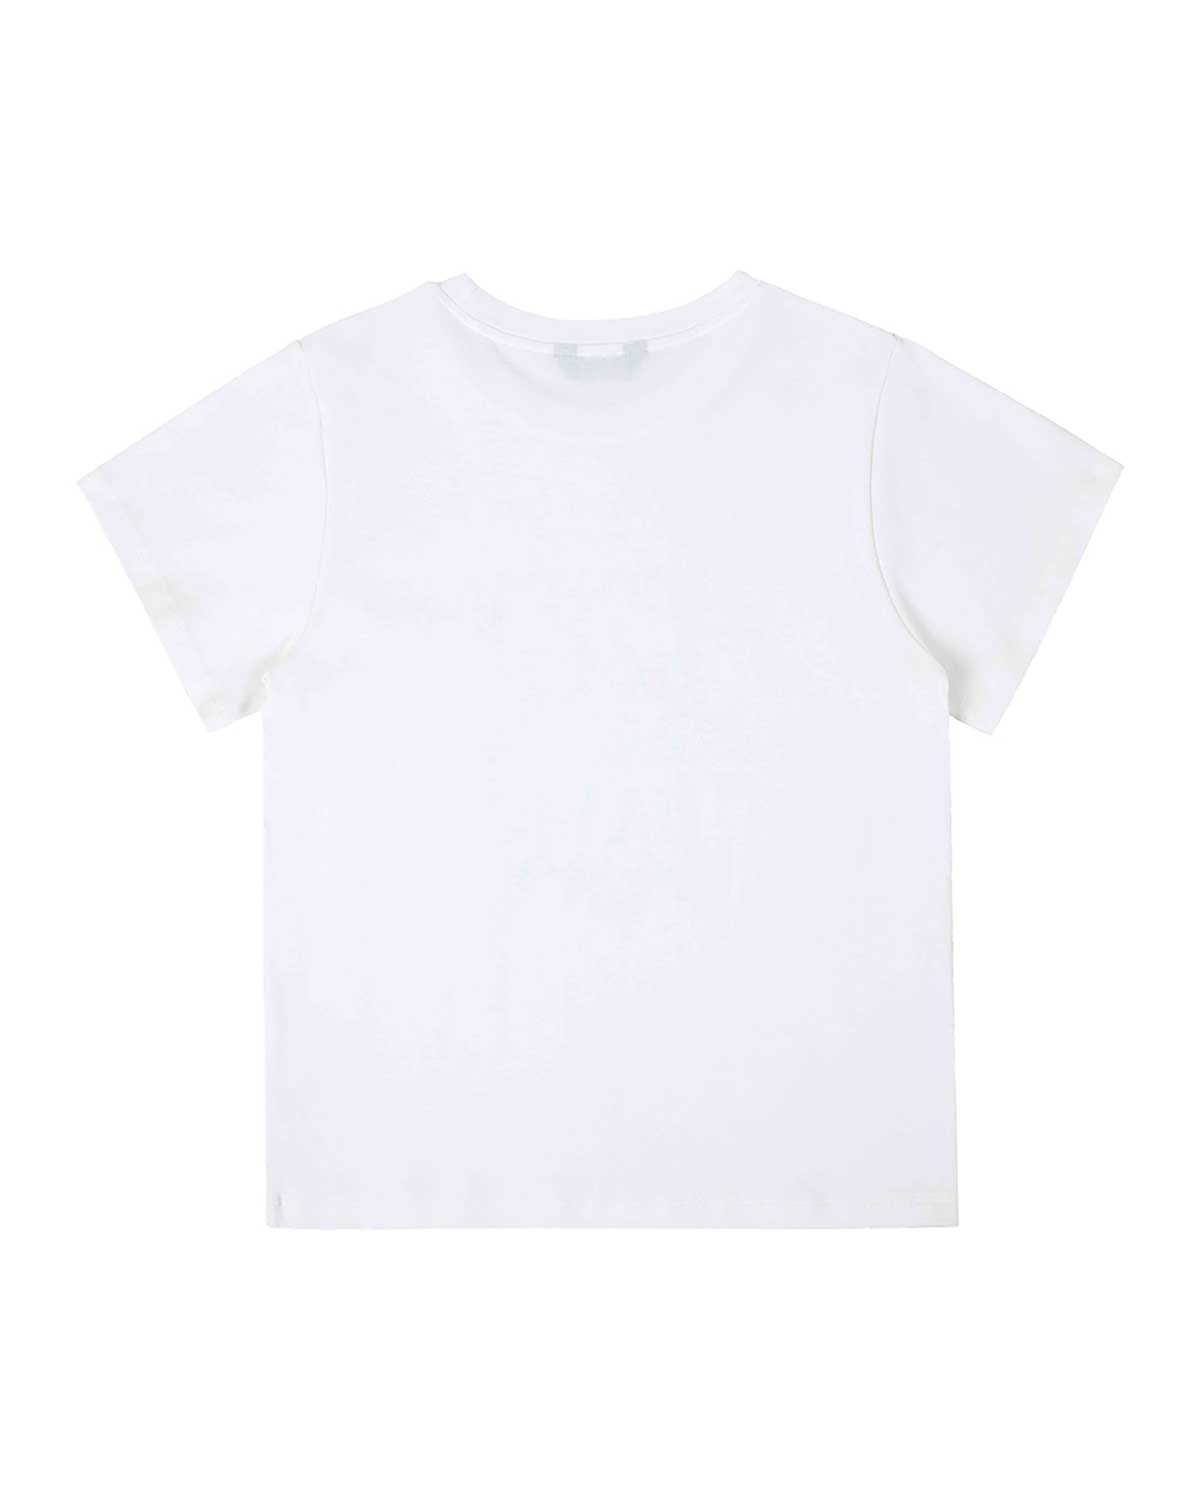 KMZS Dripping T-Shirt _ White